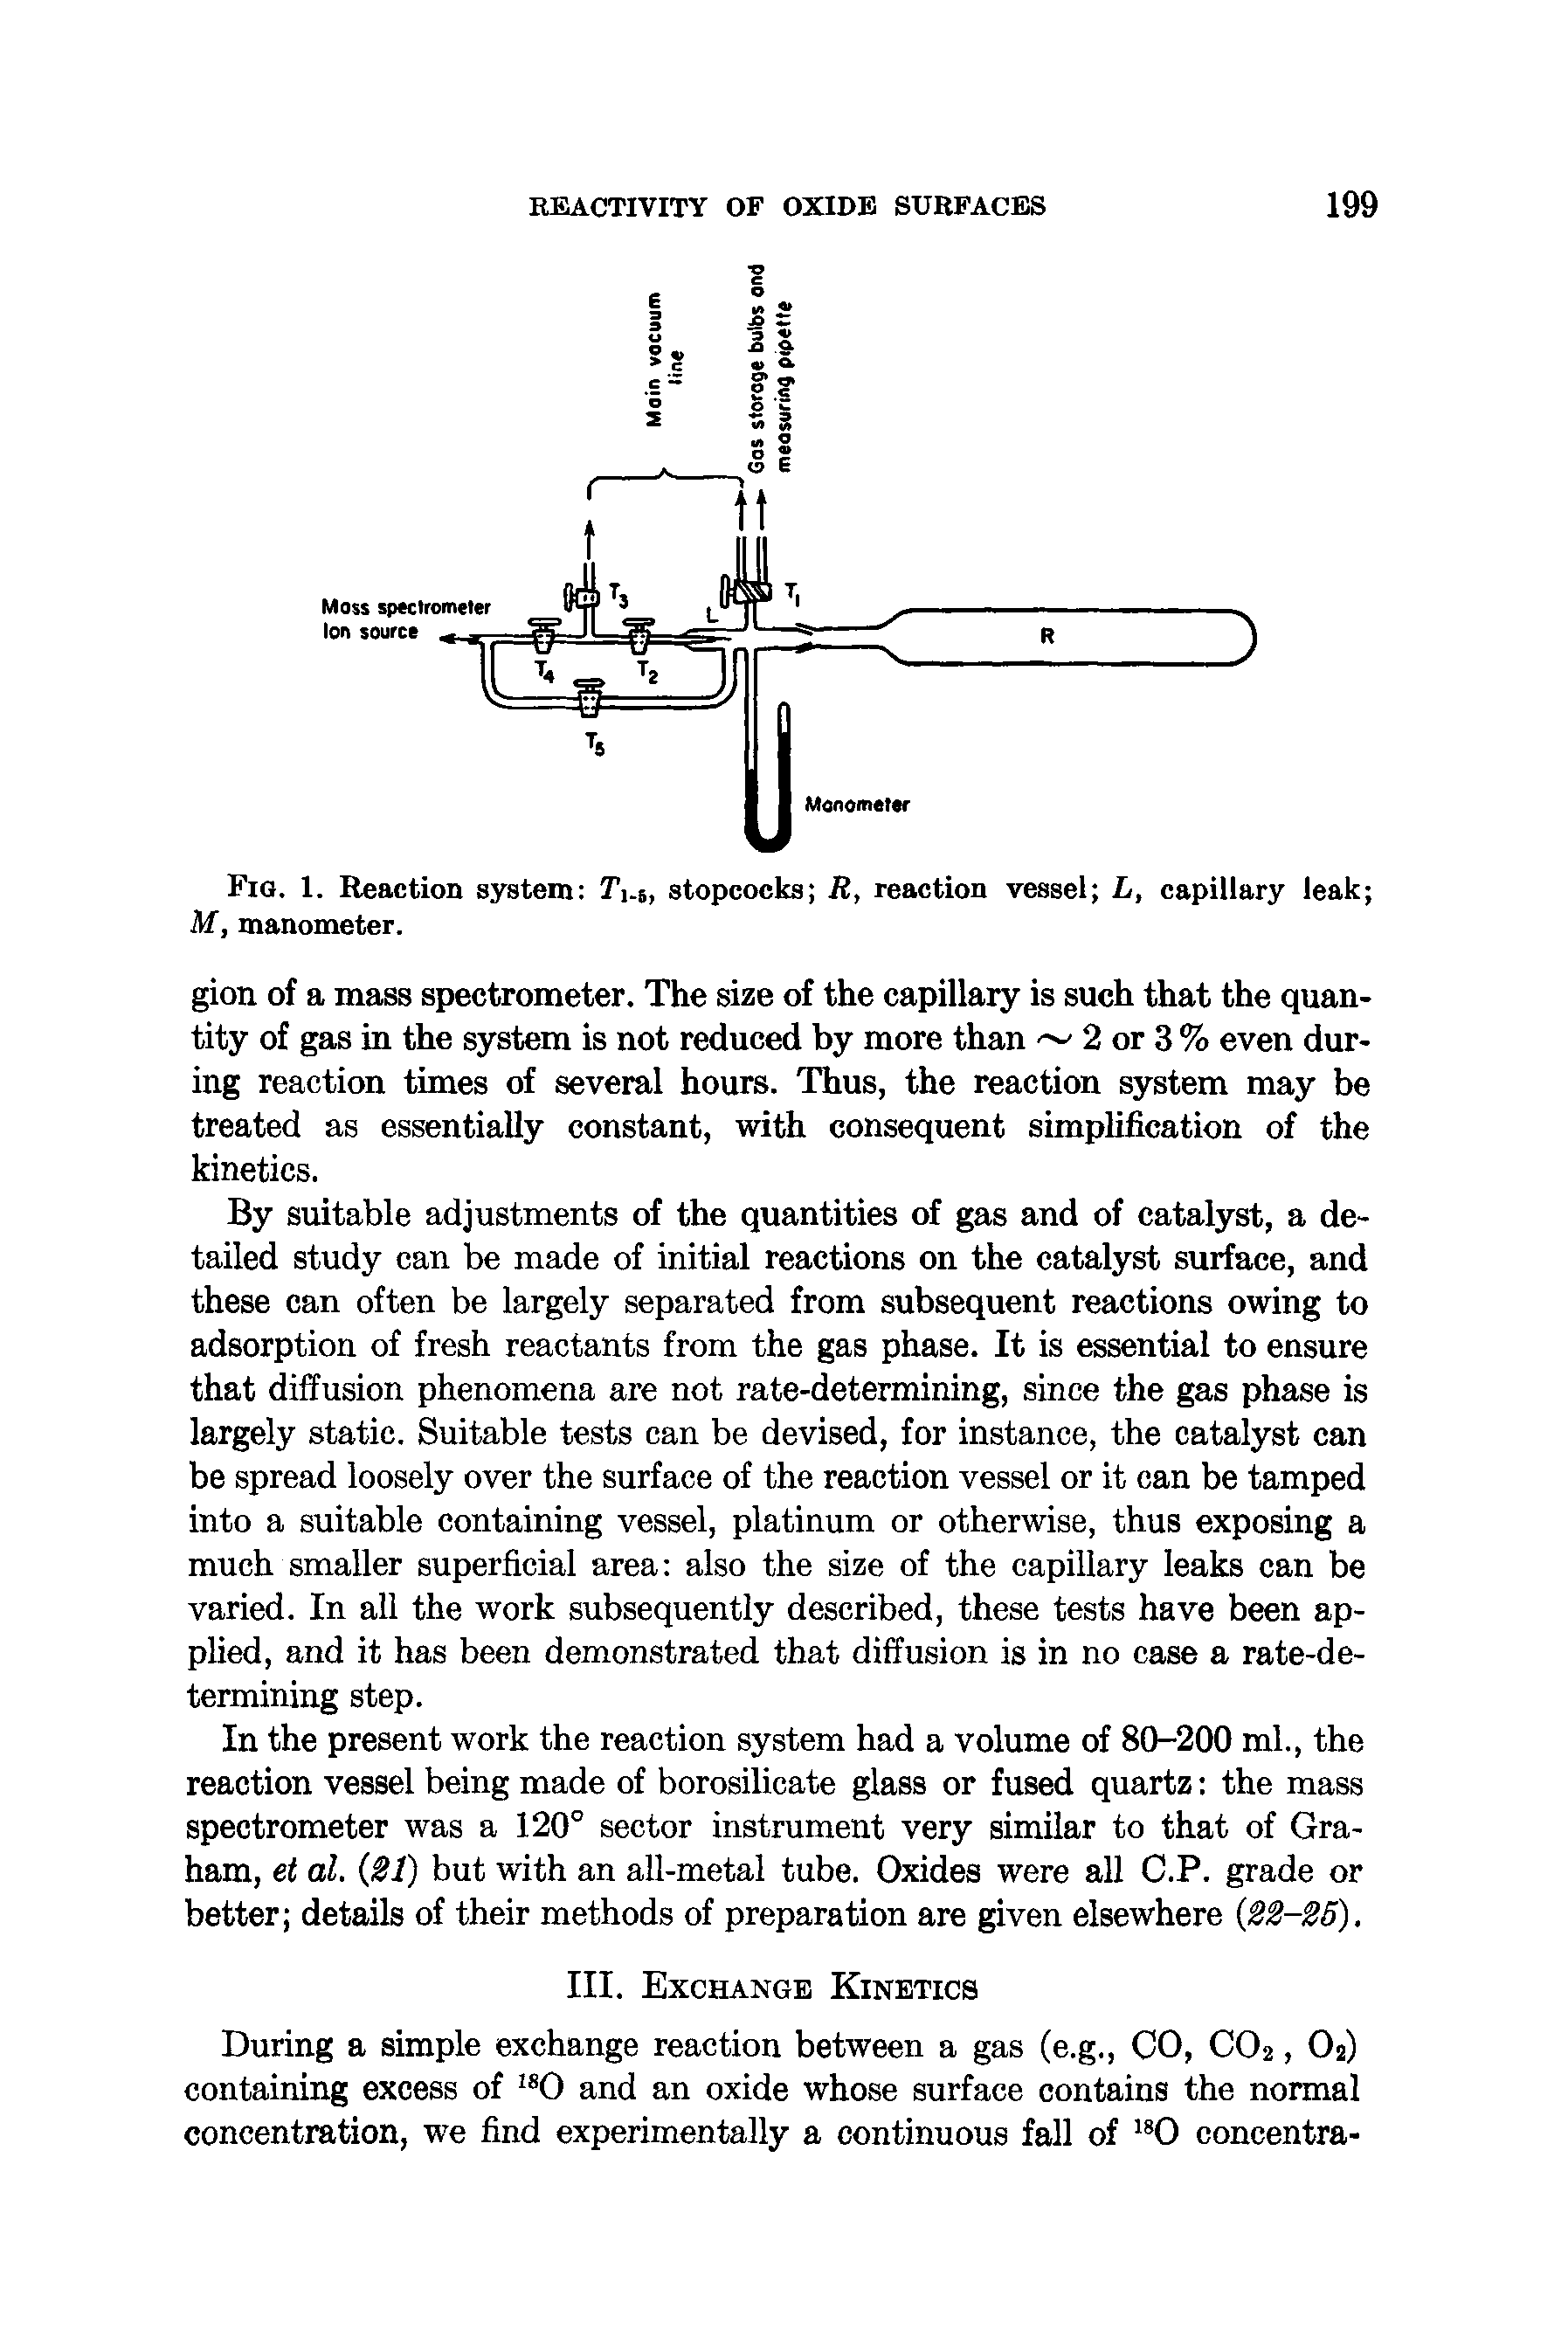 Fig. 1. Reaction system TVs, stopcocks R, reaction vessel L, capillary leak M, manometer.